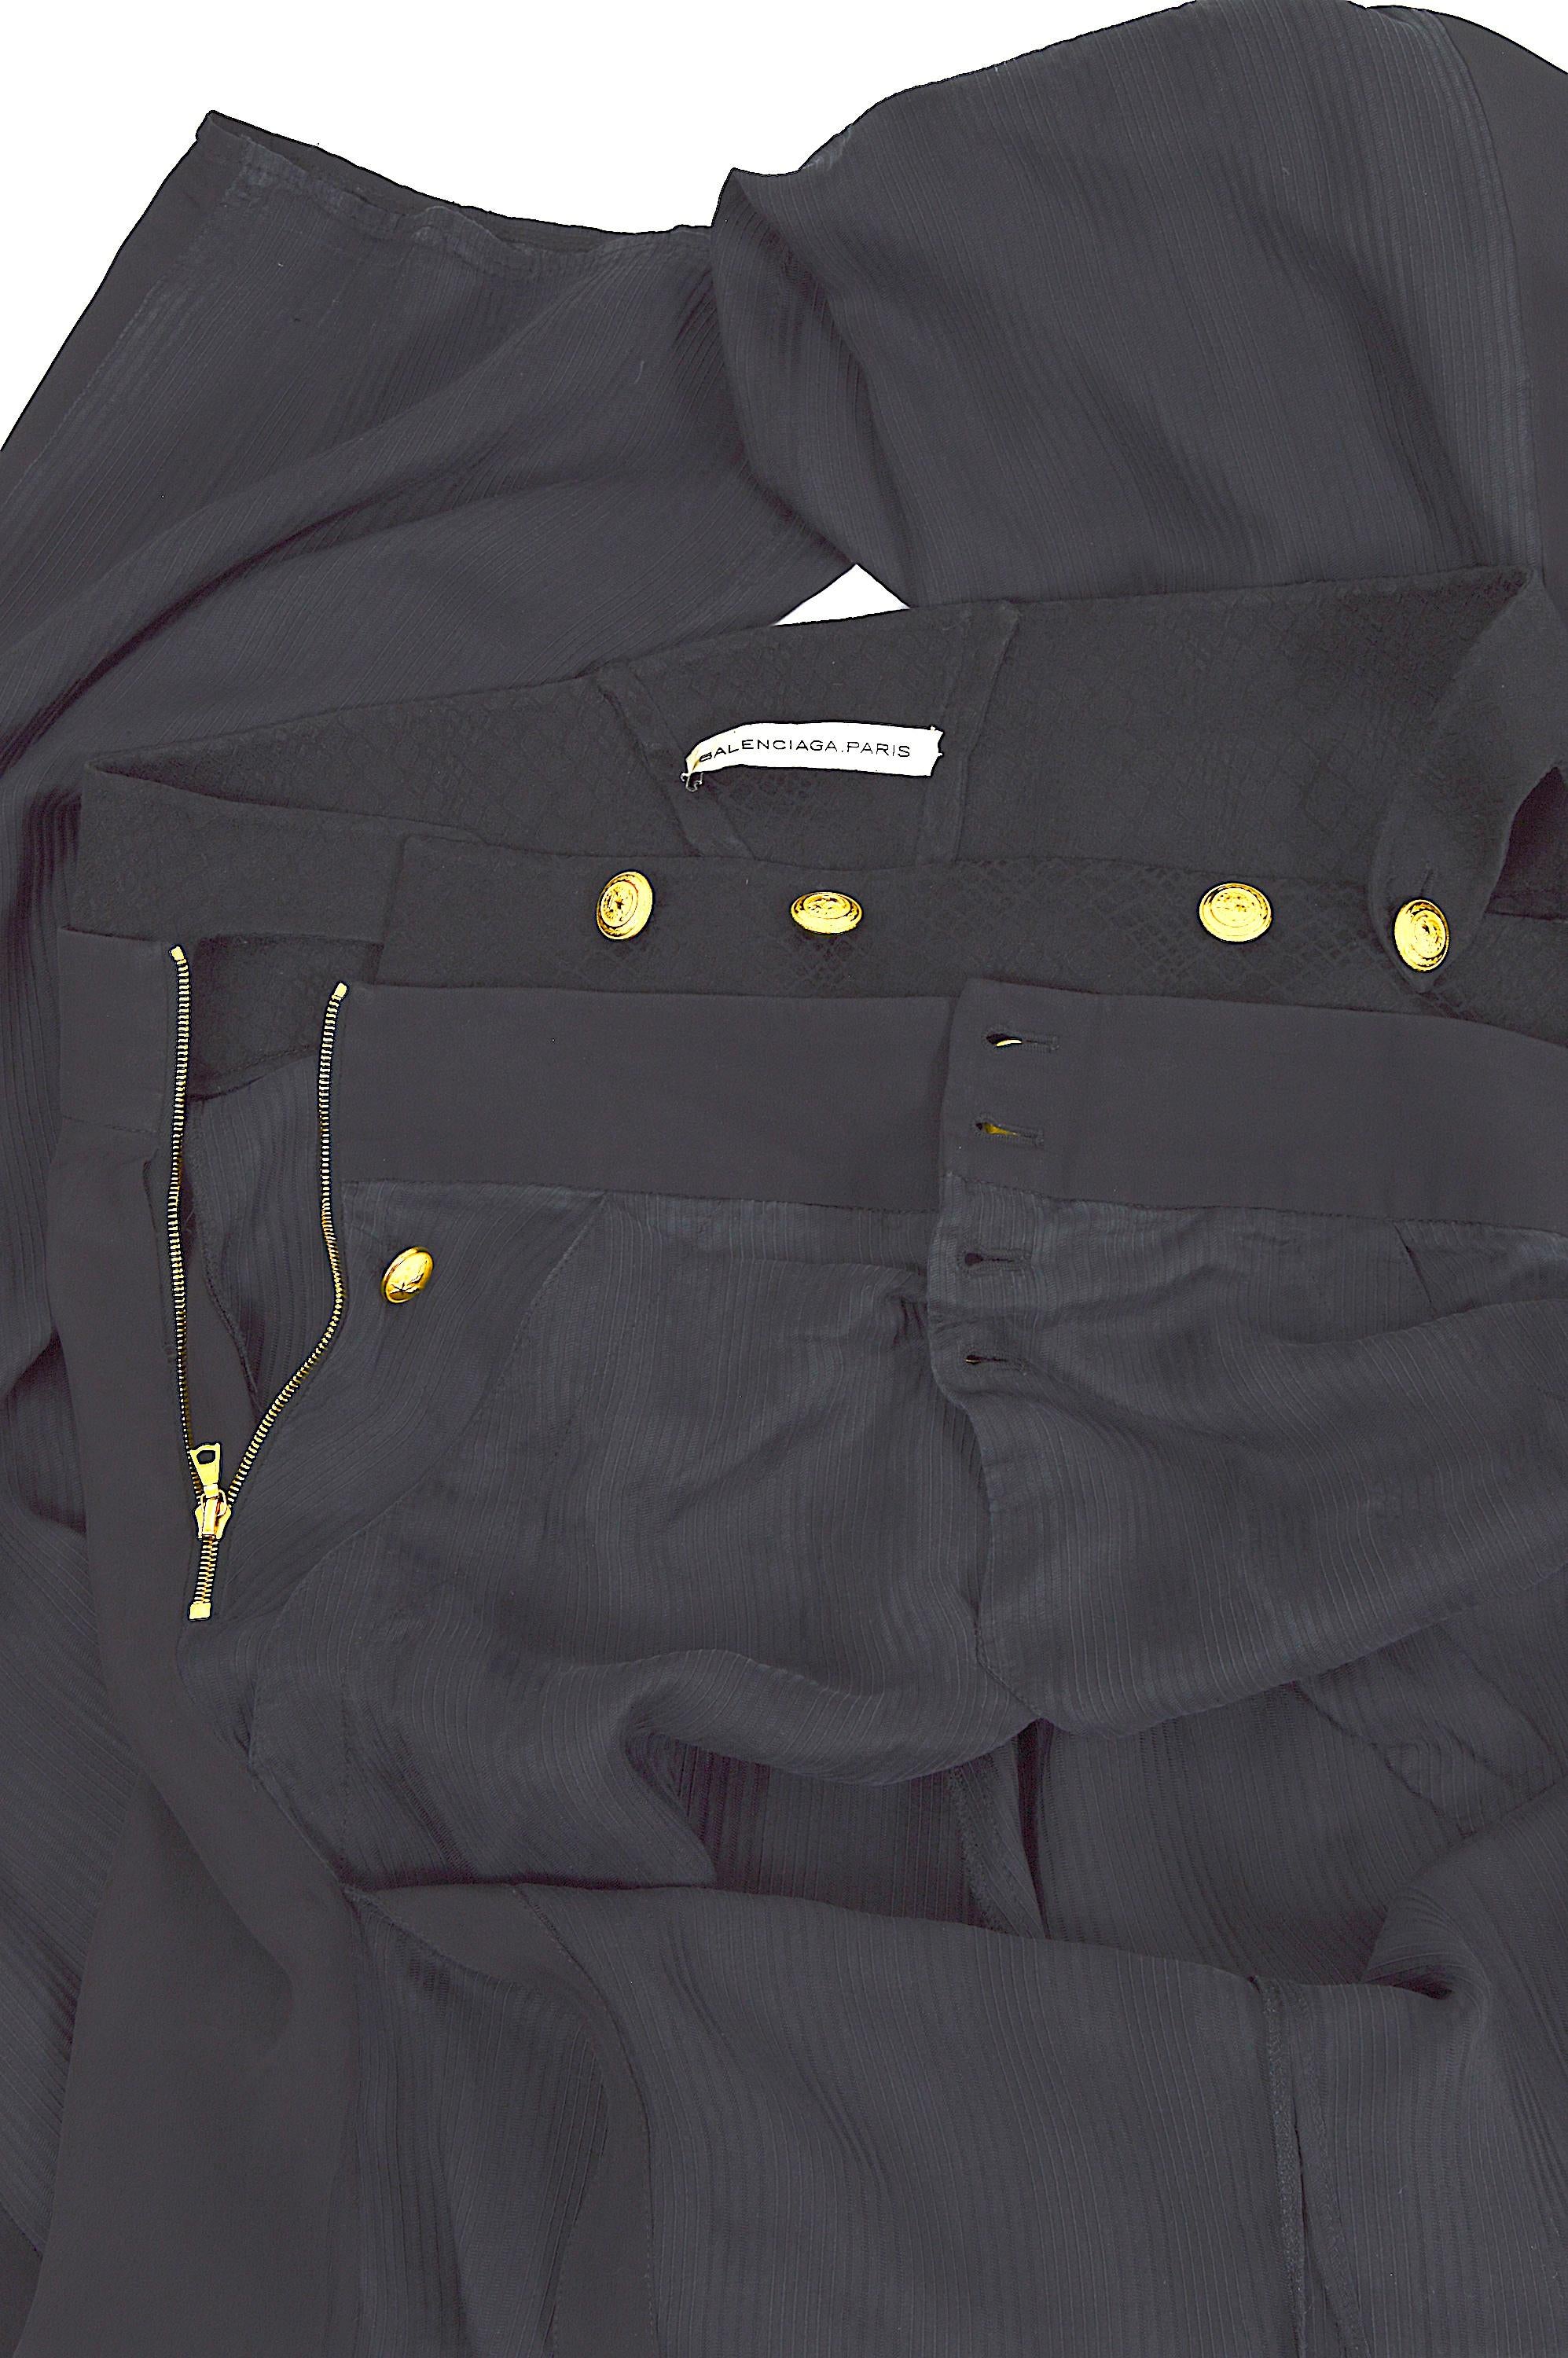 Balenciaga by Nicolas Ghesquière SS 2005 runway black silk brass buttons pants For Sale 7